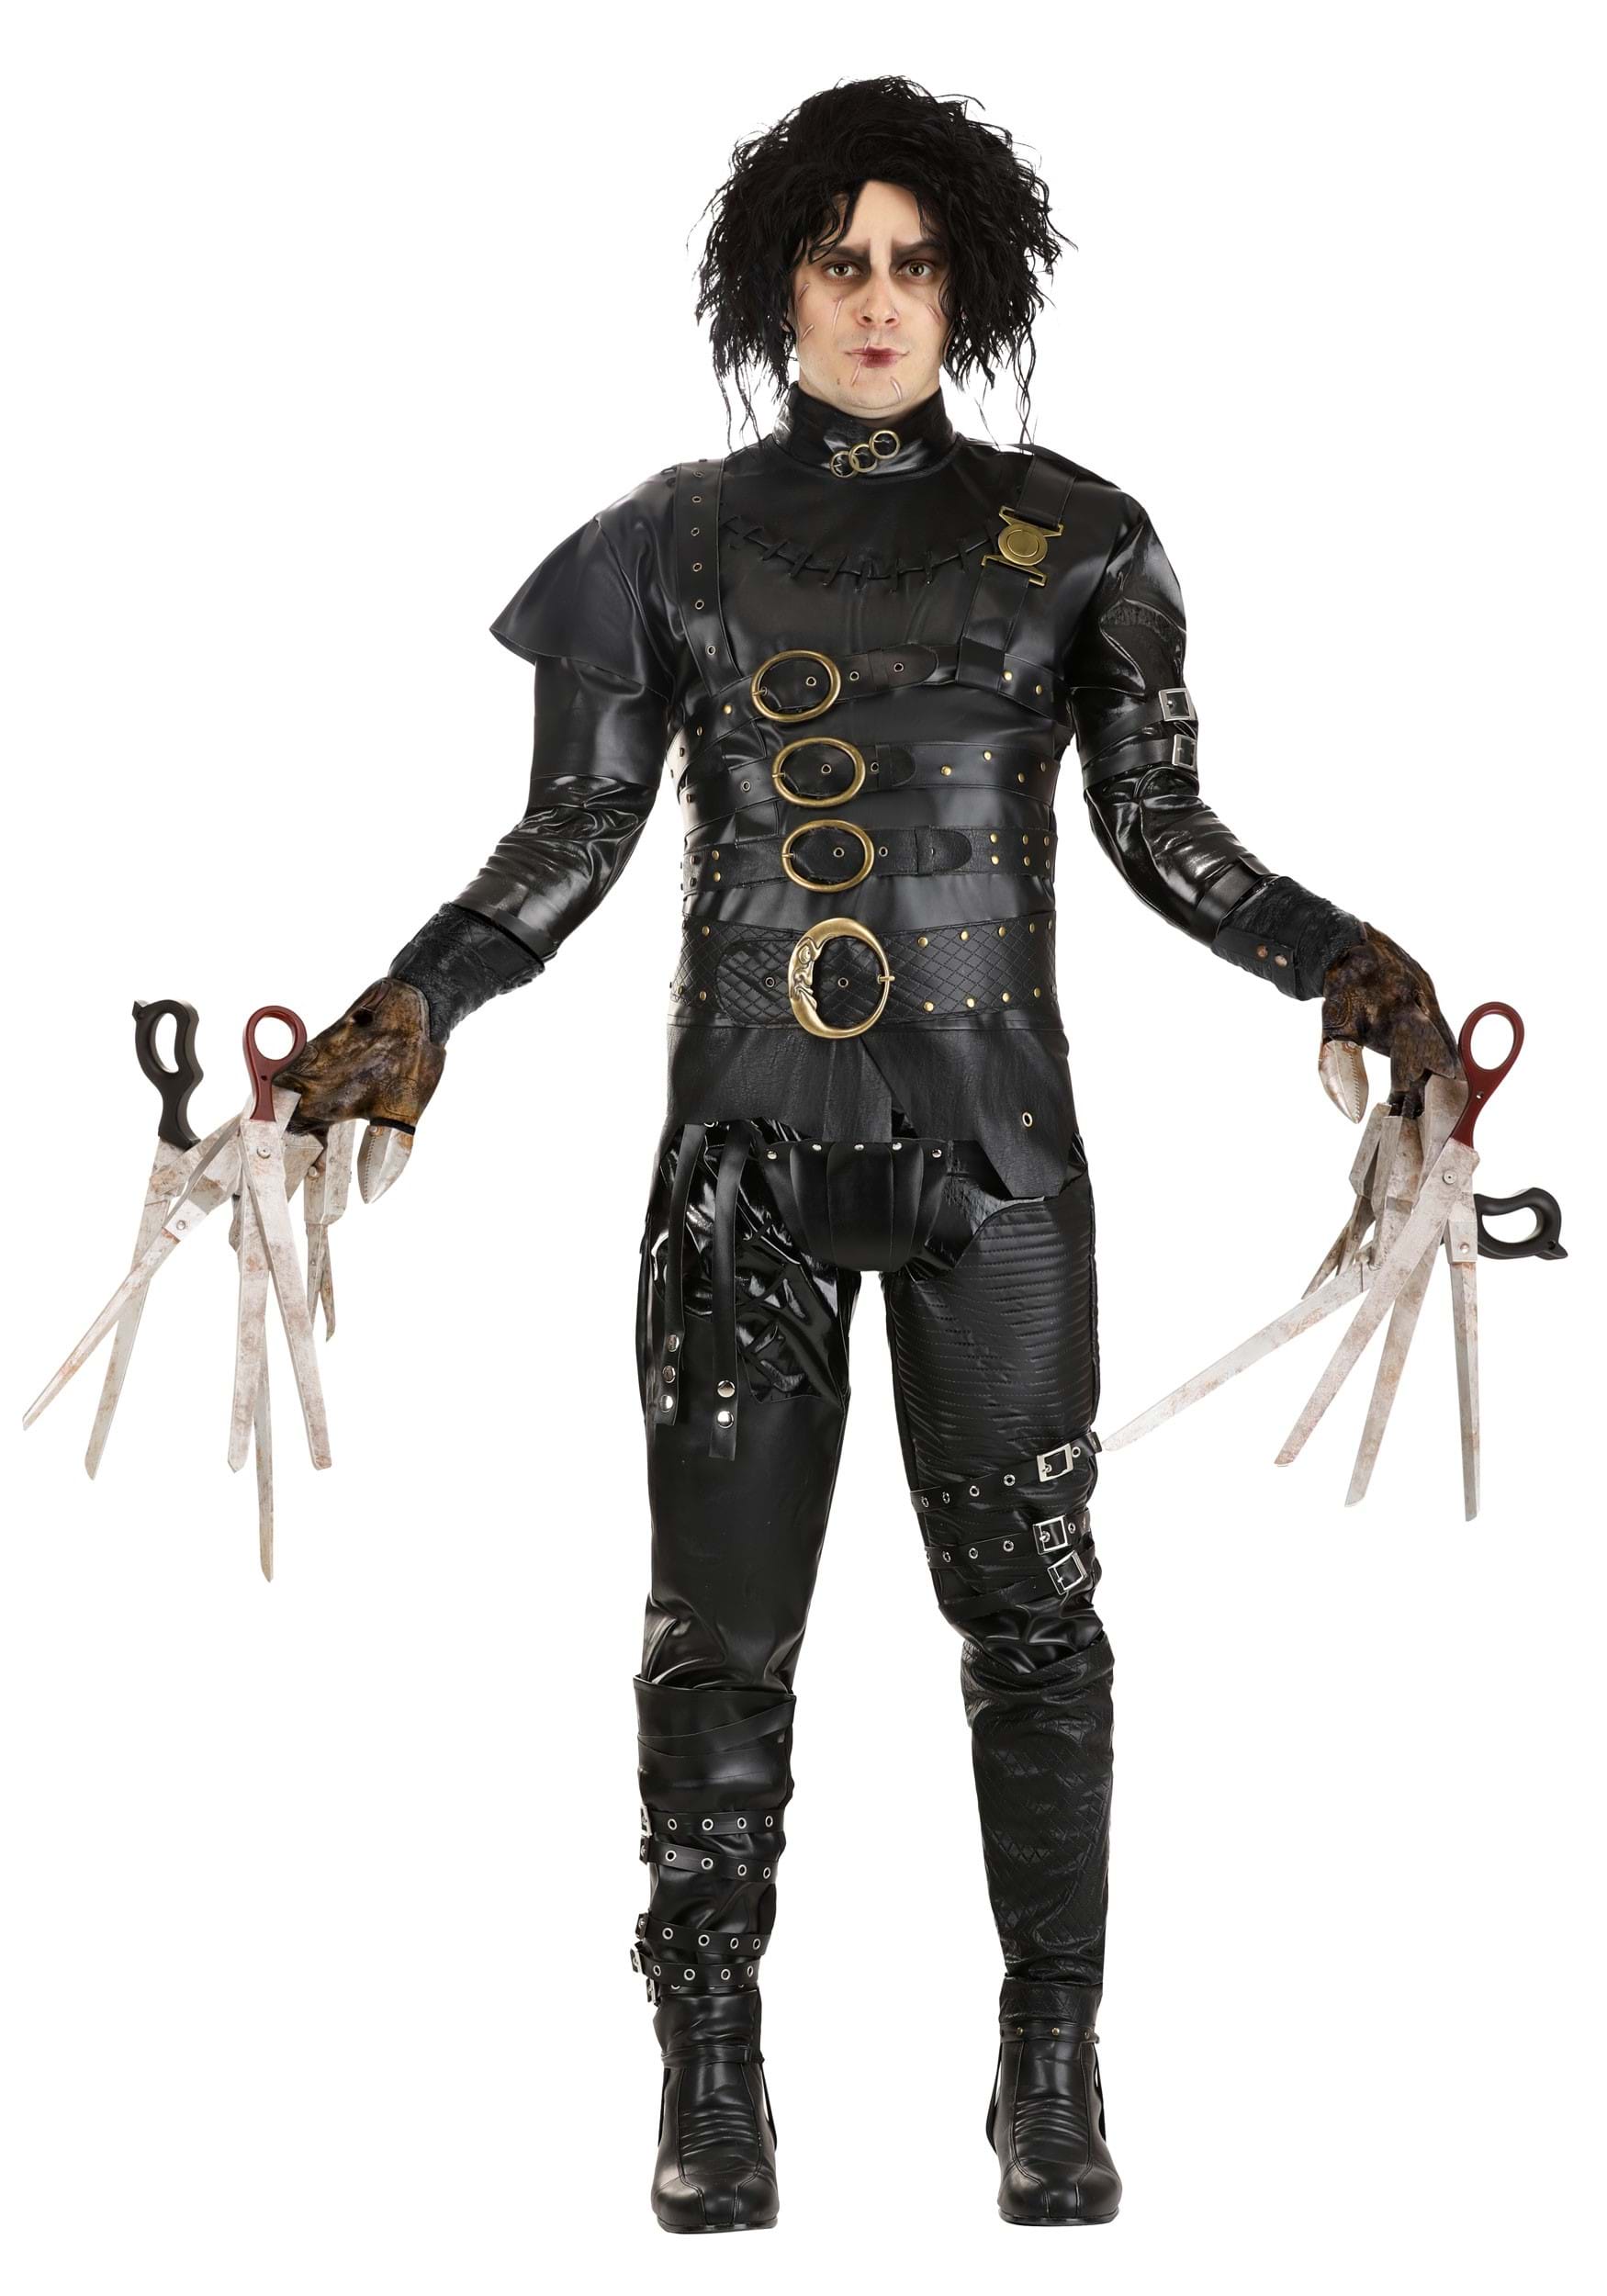 32.) Movie Quality Edward Scissorhands Costume